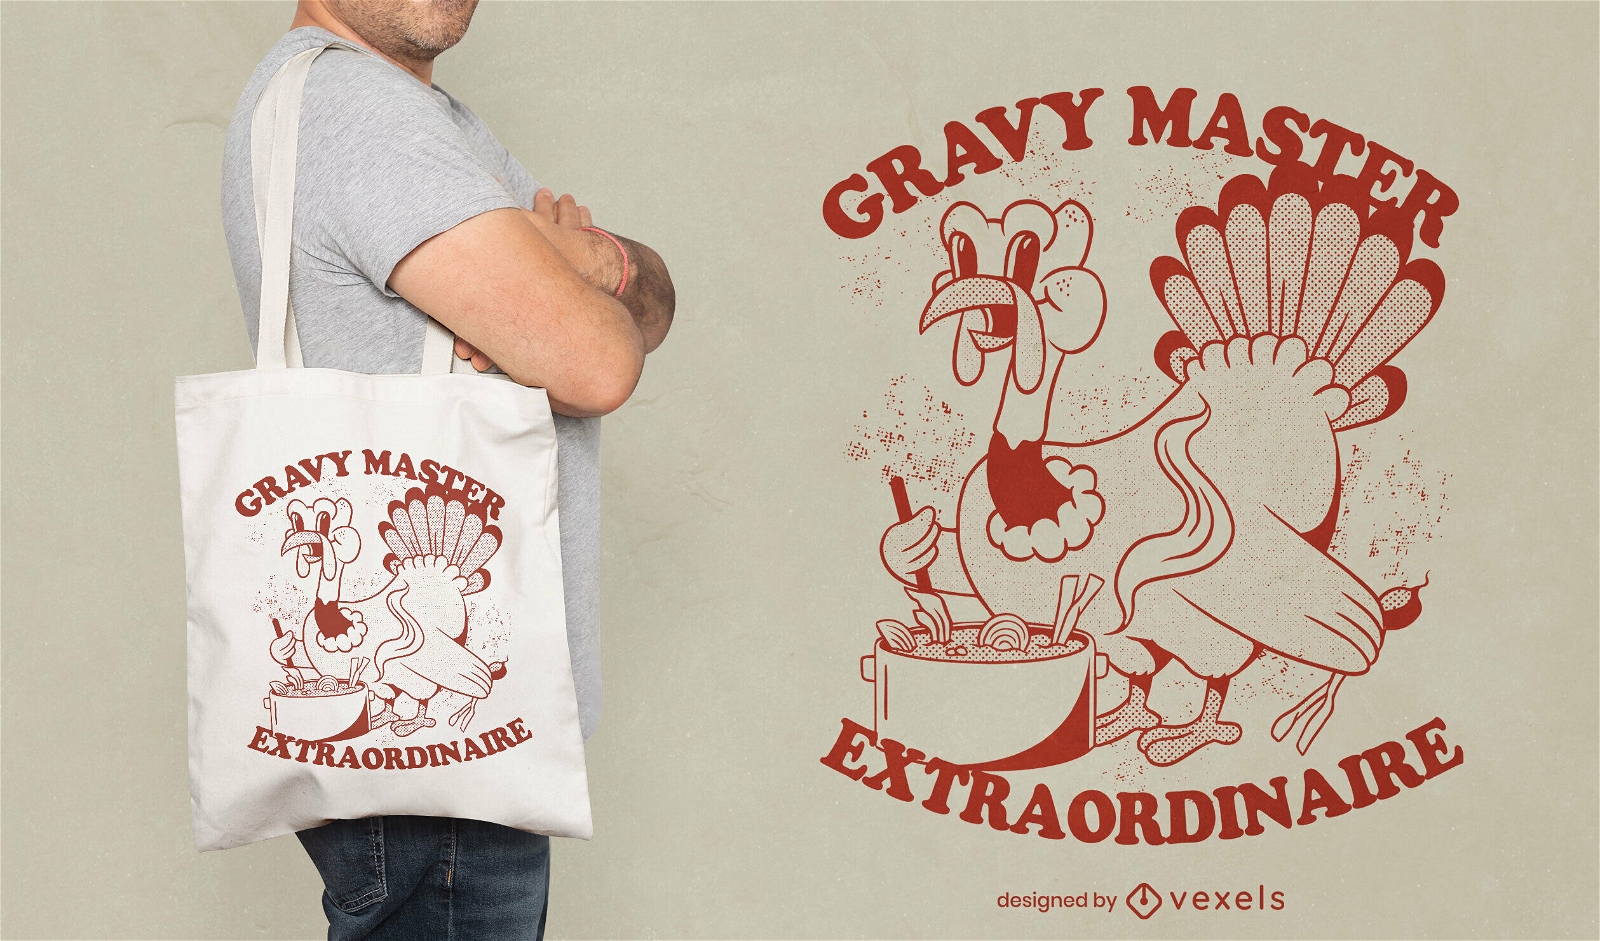 Design de sacola Gravy master turkey